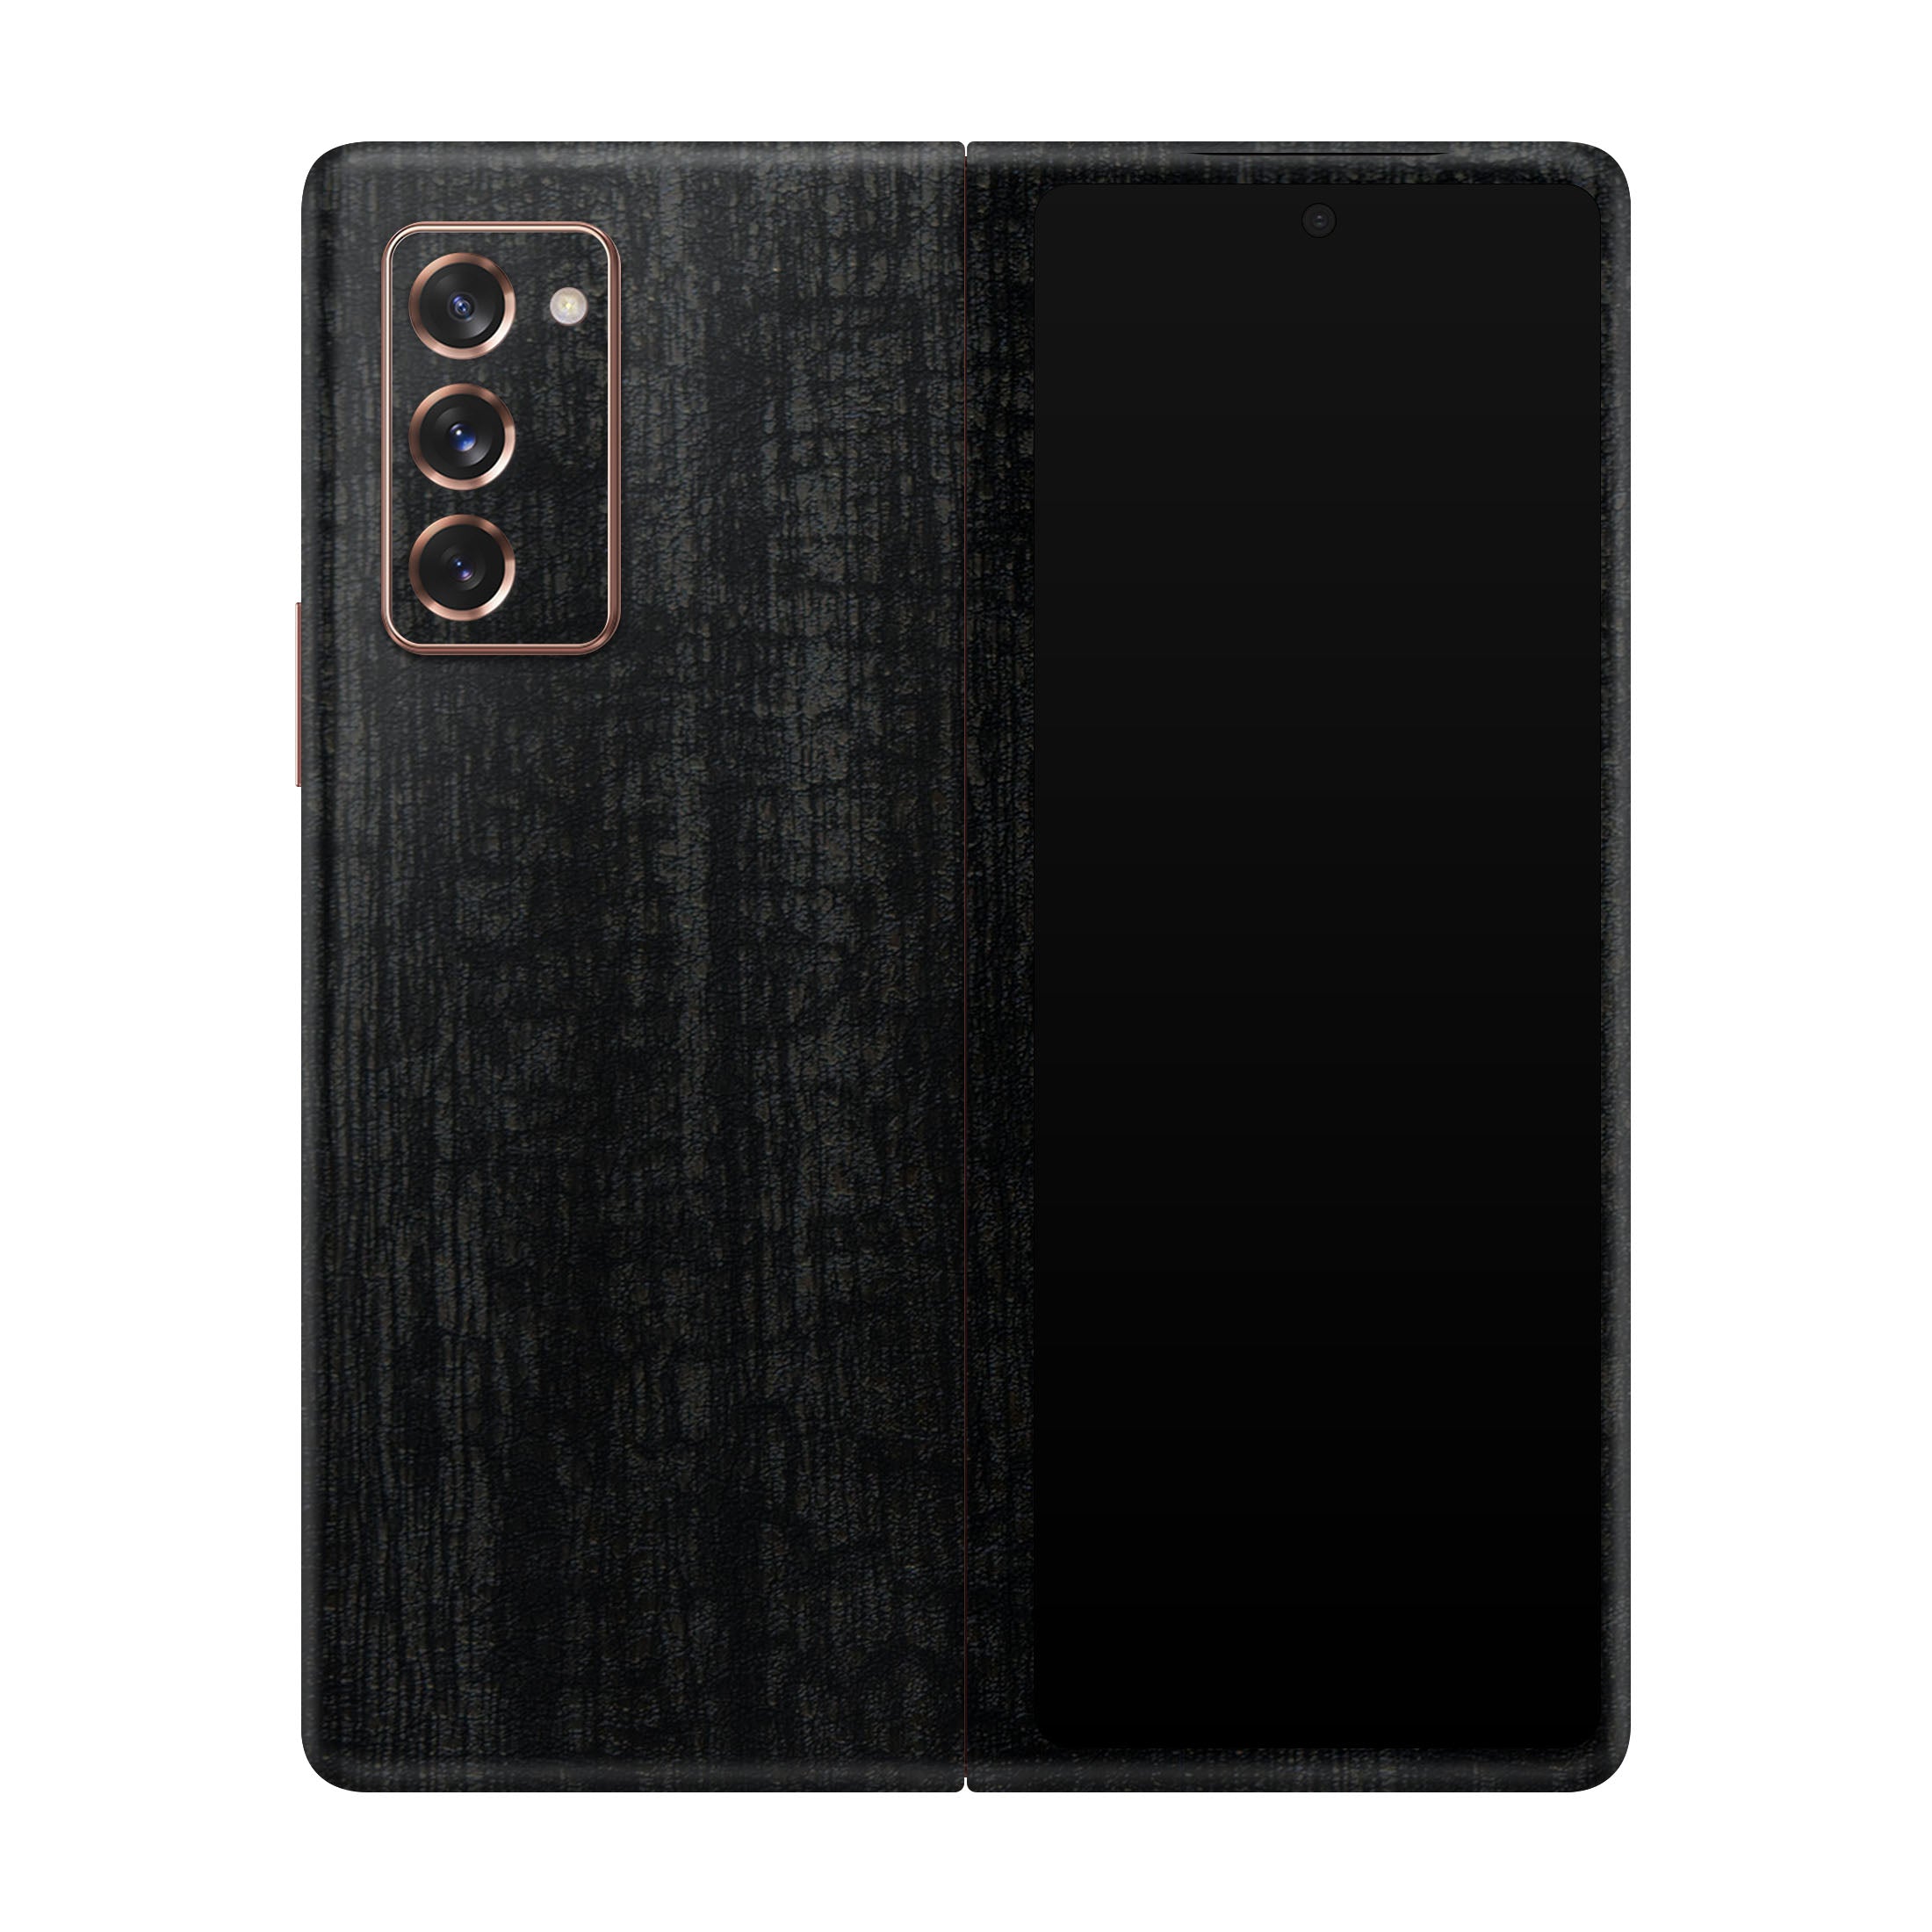 Dragon Black Skin for Samsung Fold 2